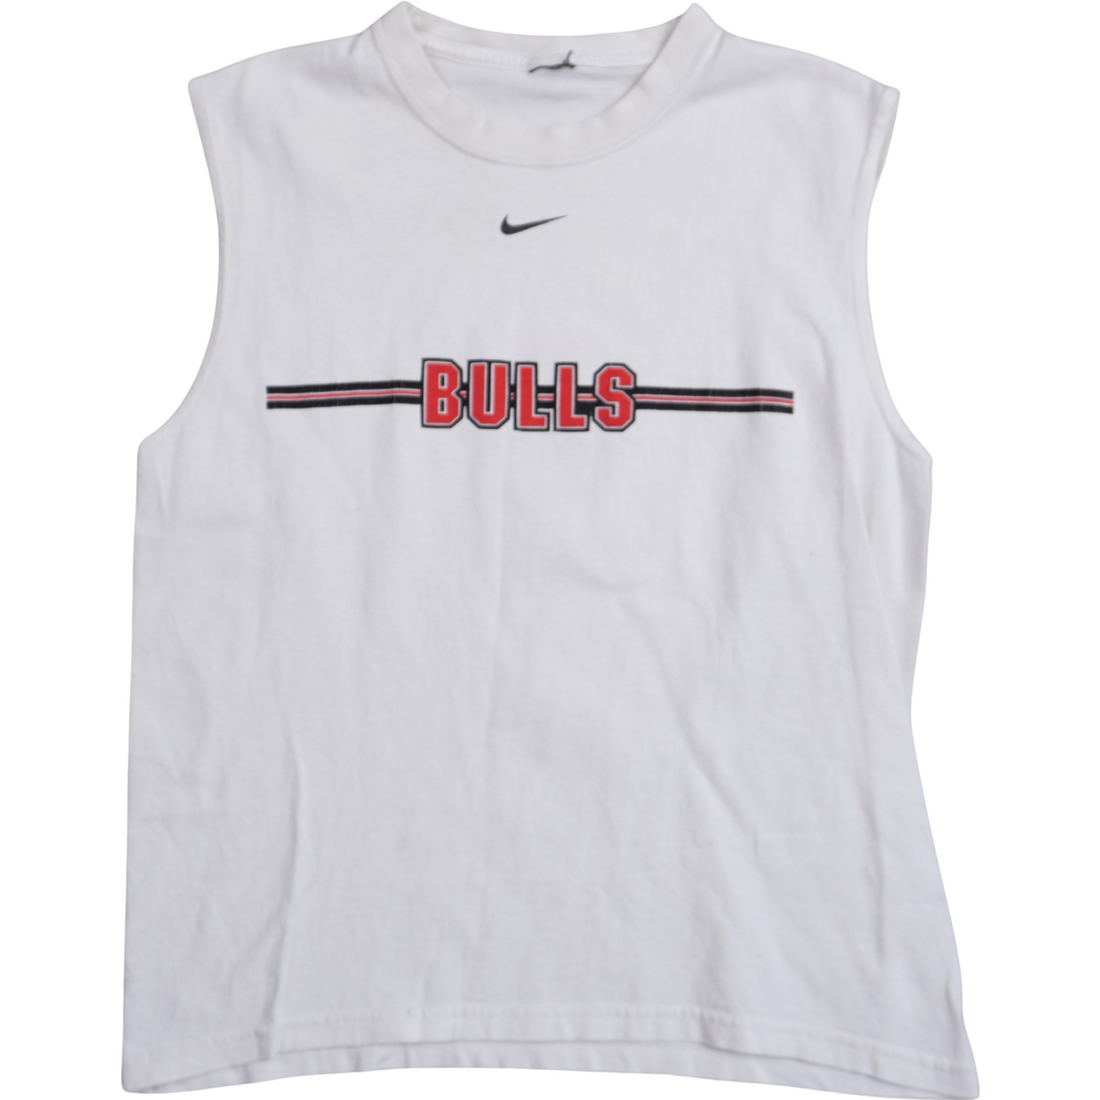 Nike Vintage Bulls T-Shirt (XS)